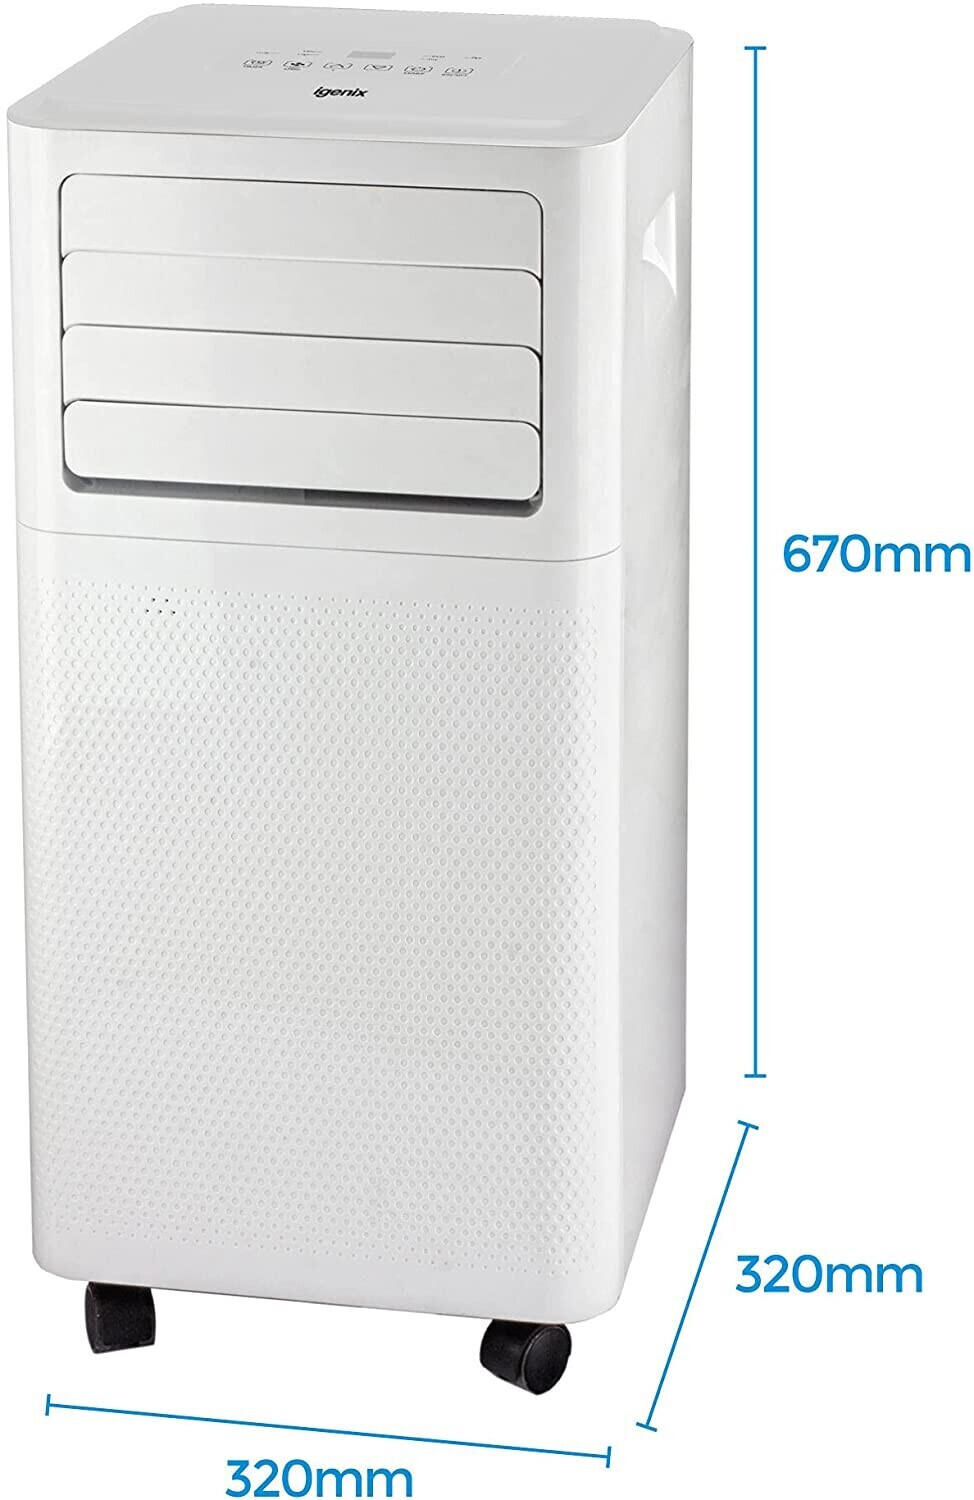 Igenix IG9907 7000 BTU 3-in-1 Portable Air Conditioner